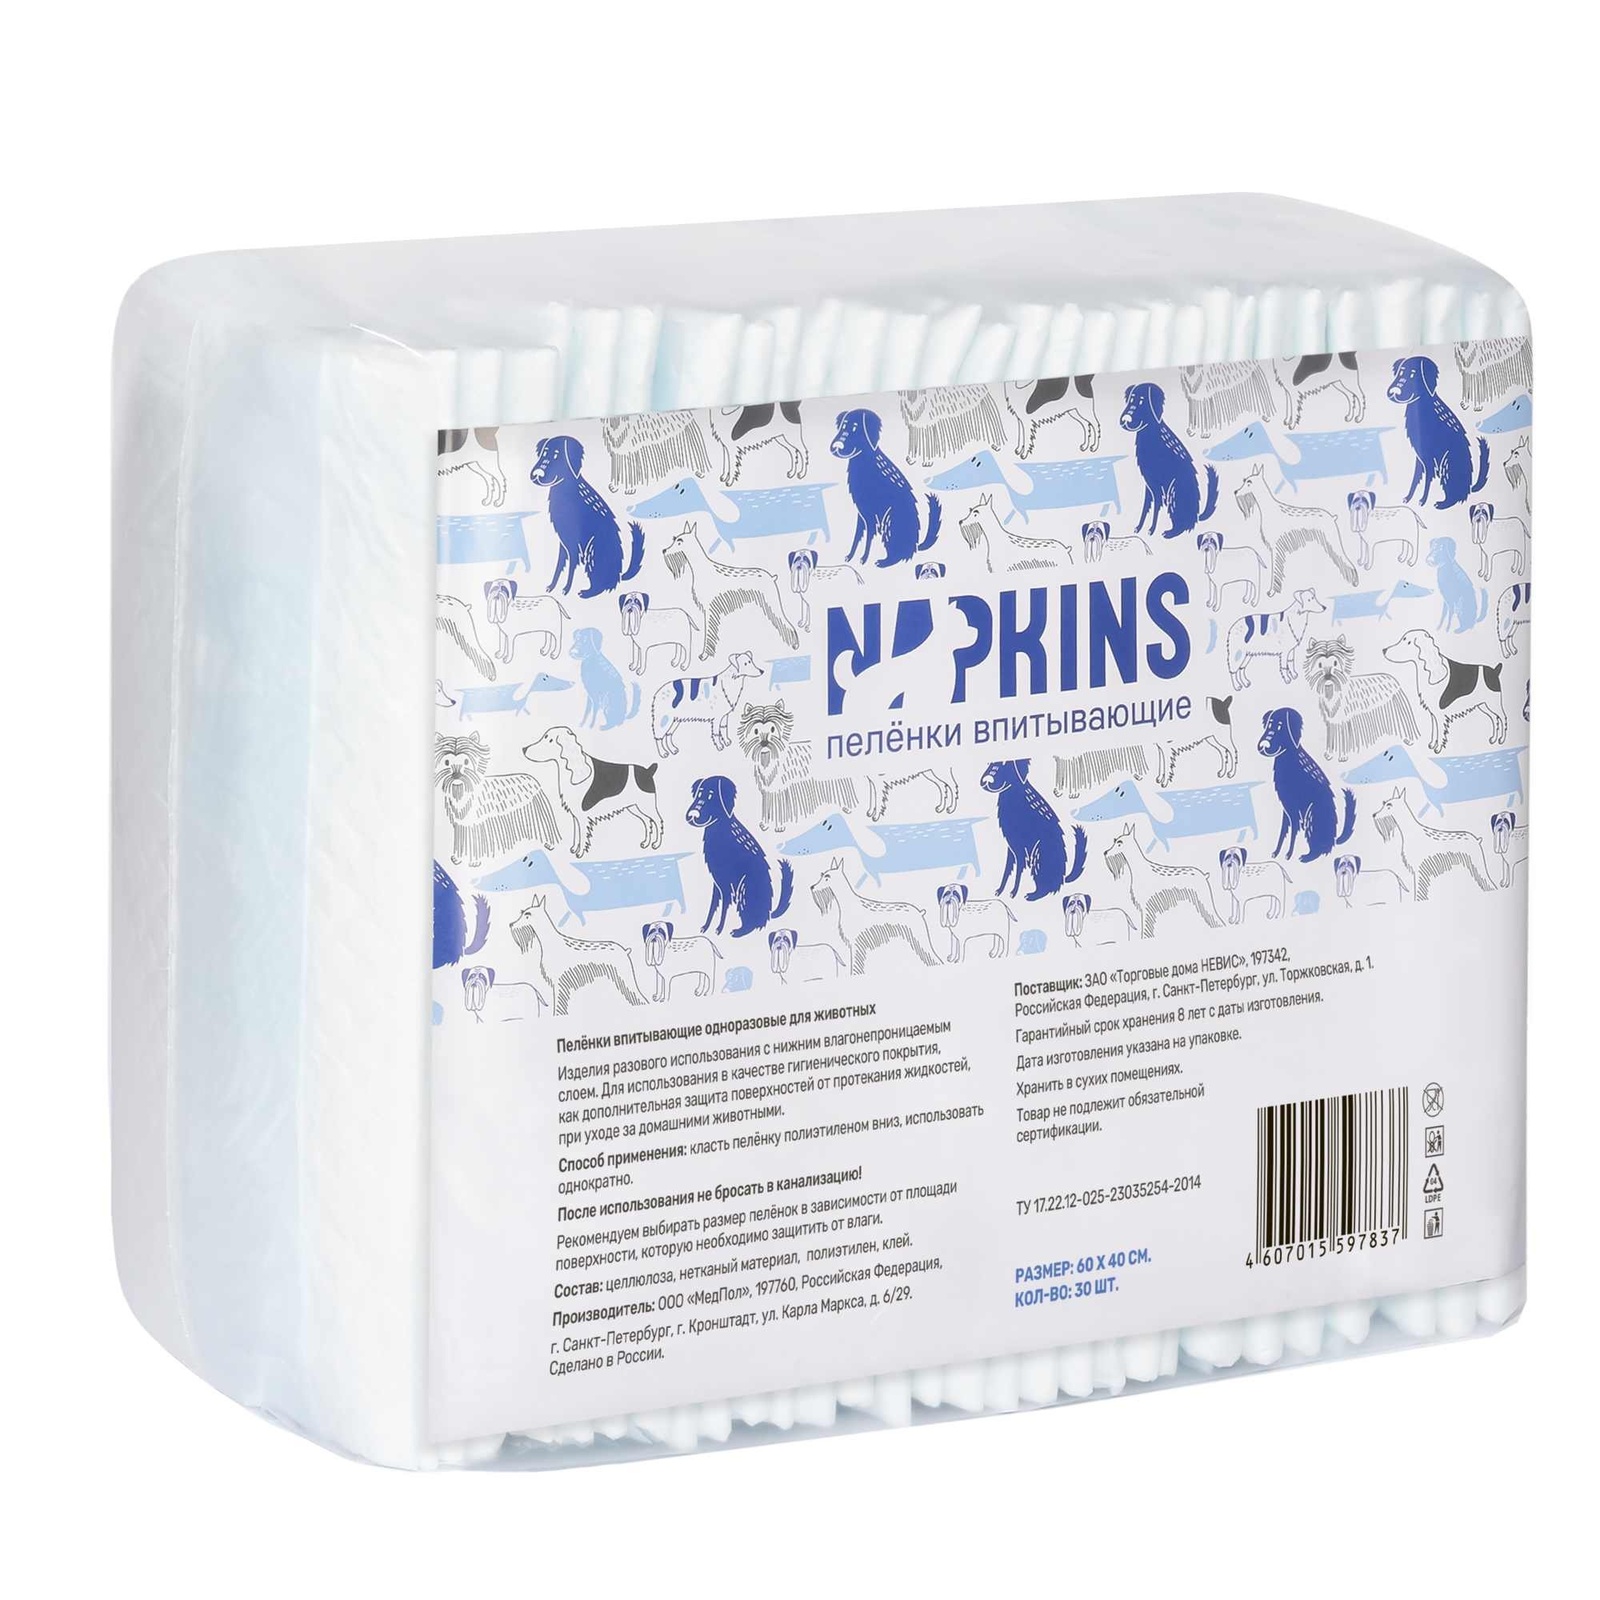 NAPKINS NAPKINS впитывающие пелёнки с целлюлозой для собак 60х40 (100 г) napkins napkins впитывающие пелёнки с целлюлозой классические 60х40 10 шт